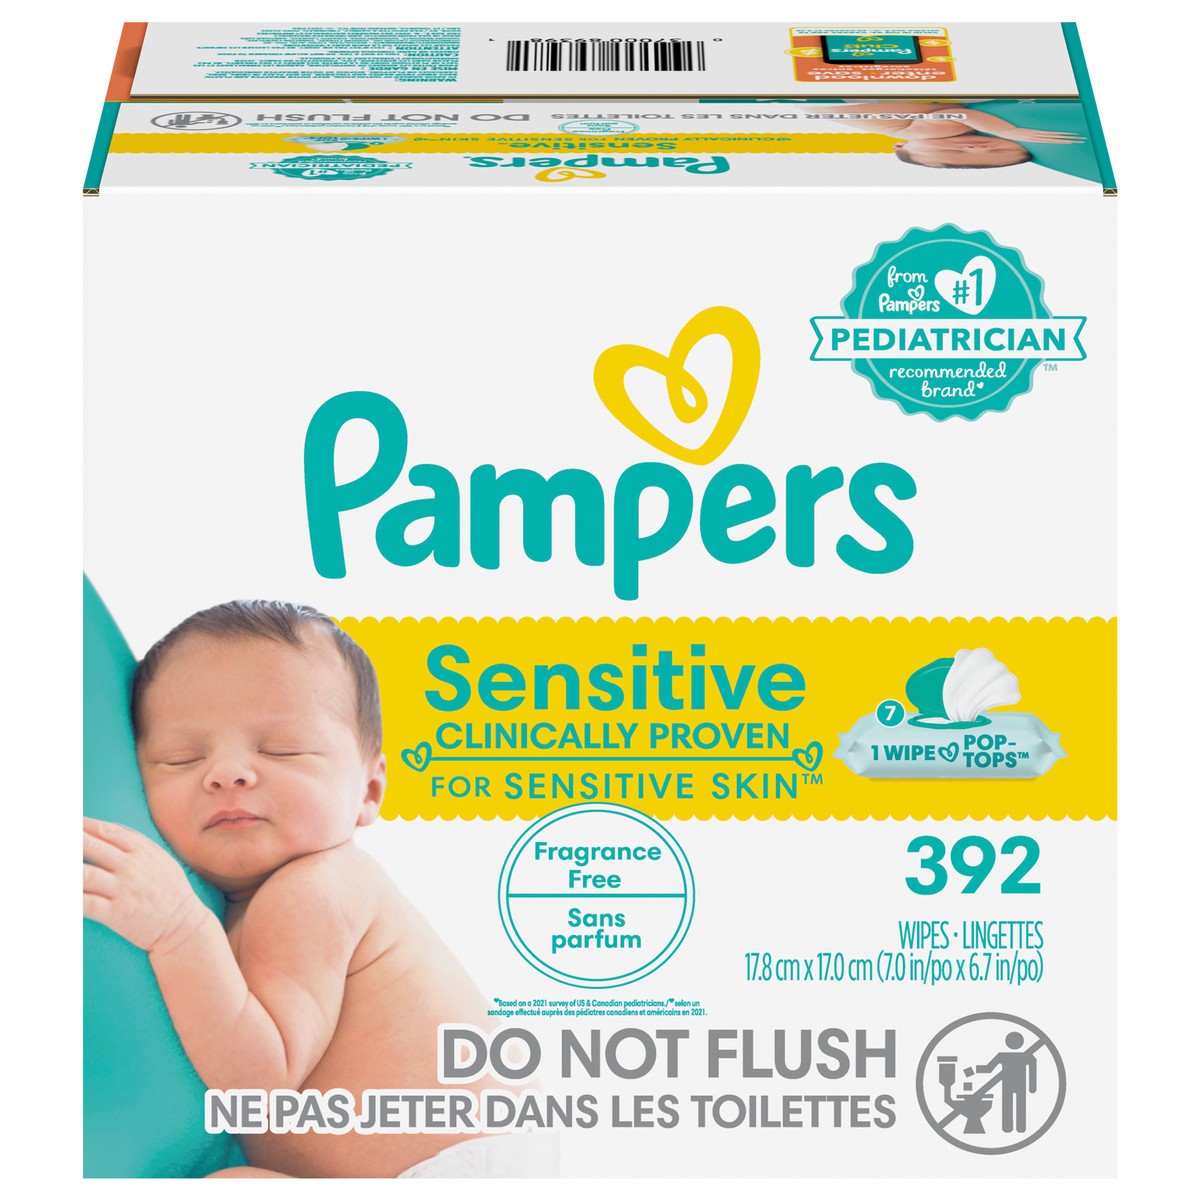 slide 1 of 4, Pampers Baby Wipes Sensitive Perfume Free 7X Pop-Top Packs 392 Count, 392 ct